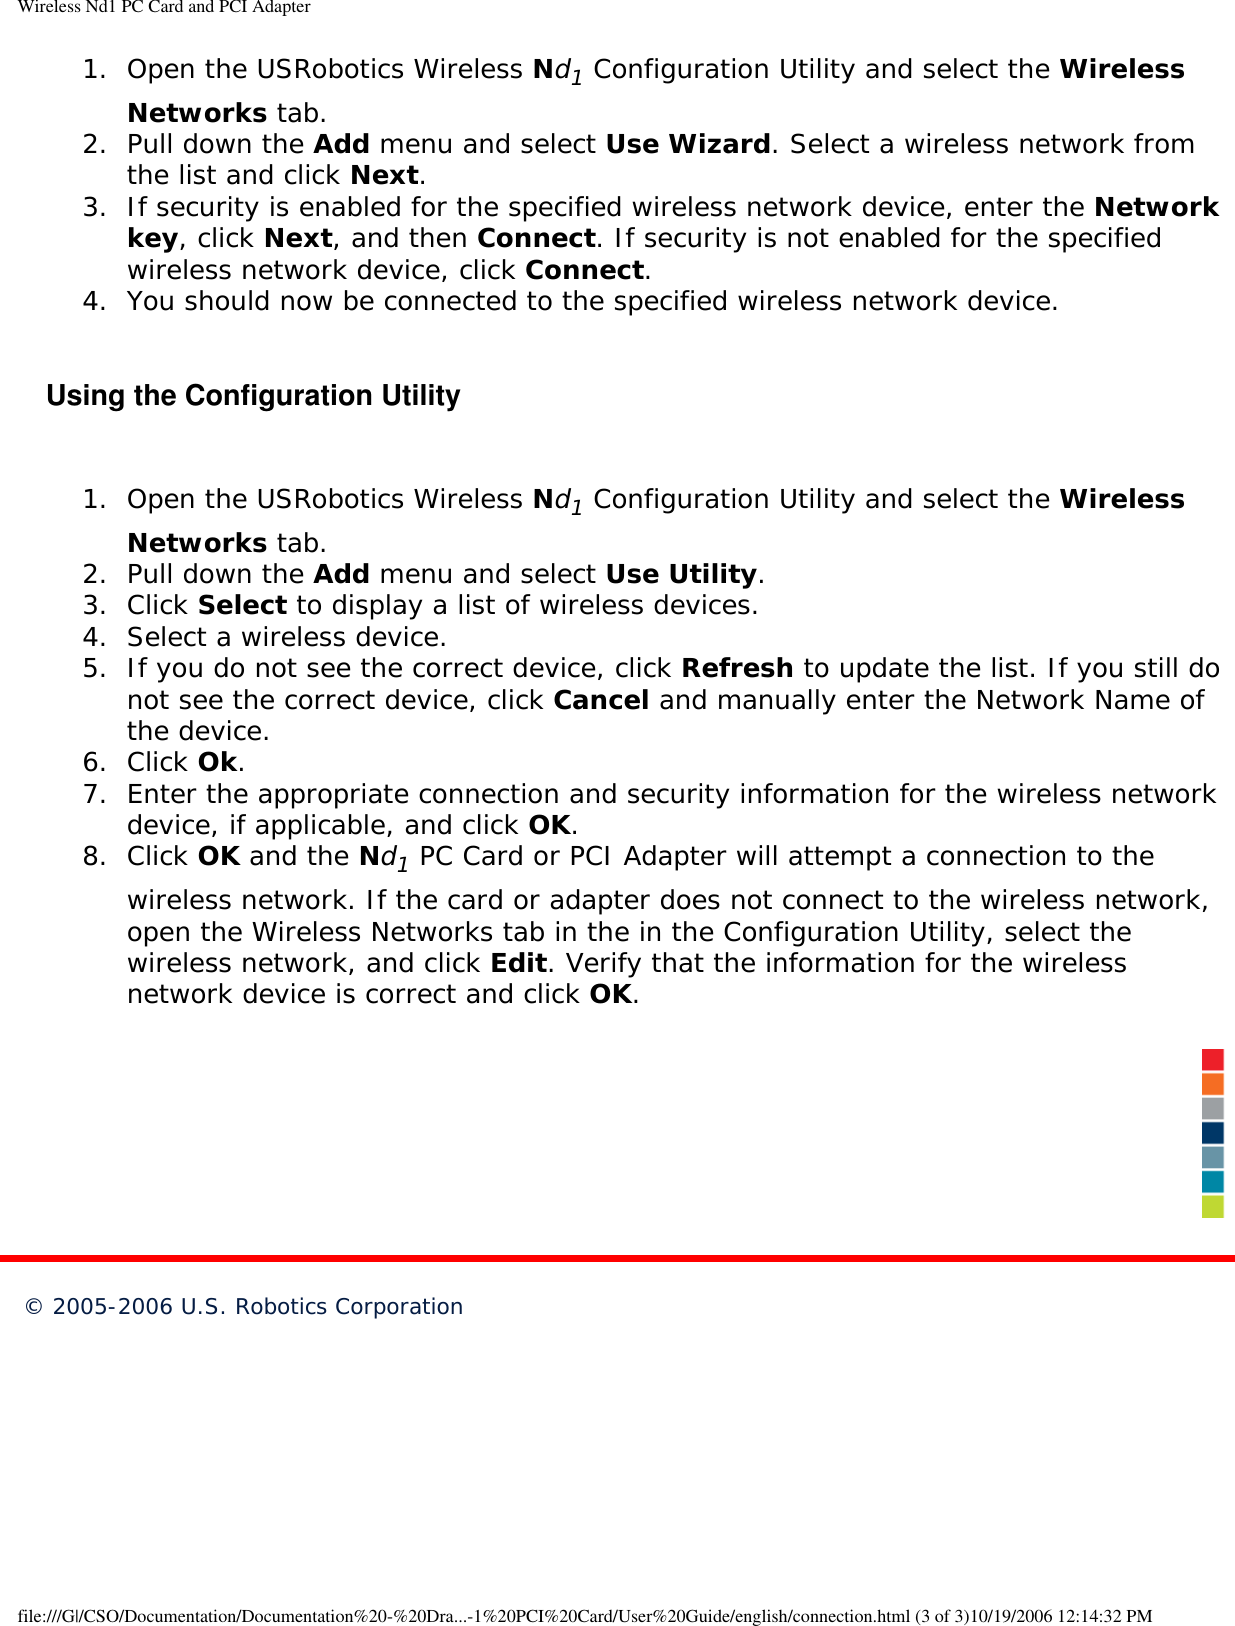 Page 15 of GemTek Technology P950622G USRobotics Wireless Nd1 PCI Adapter User Manual Wireless Nd1 PC Card and PCI Adapter